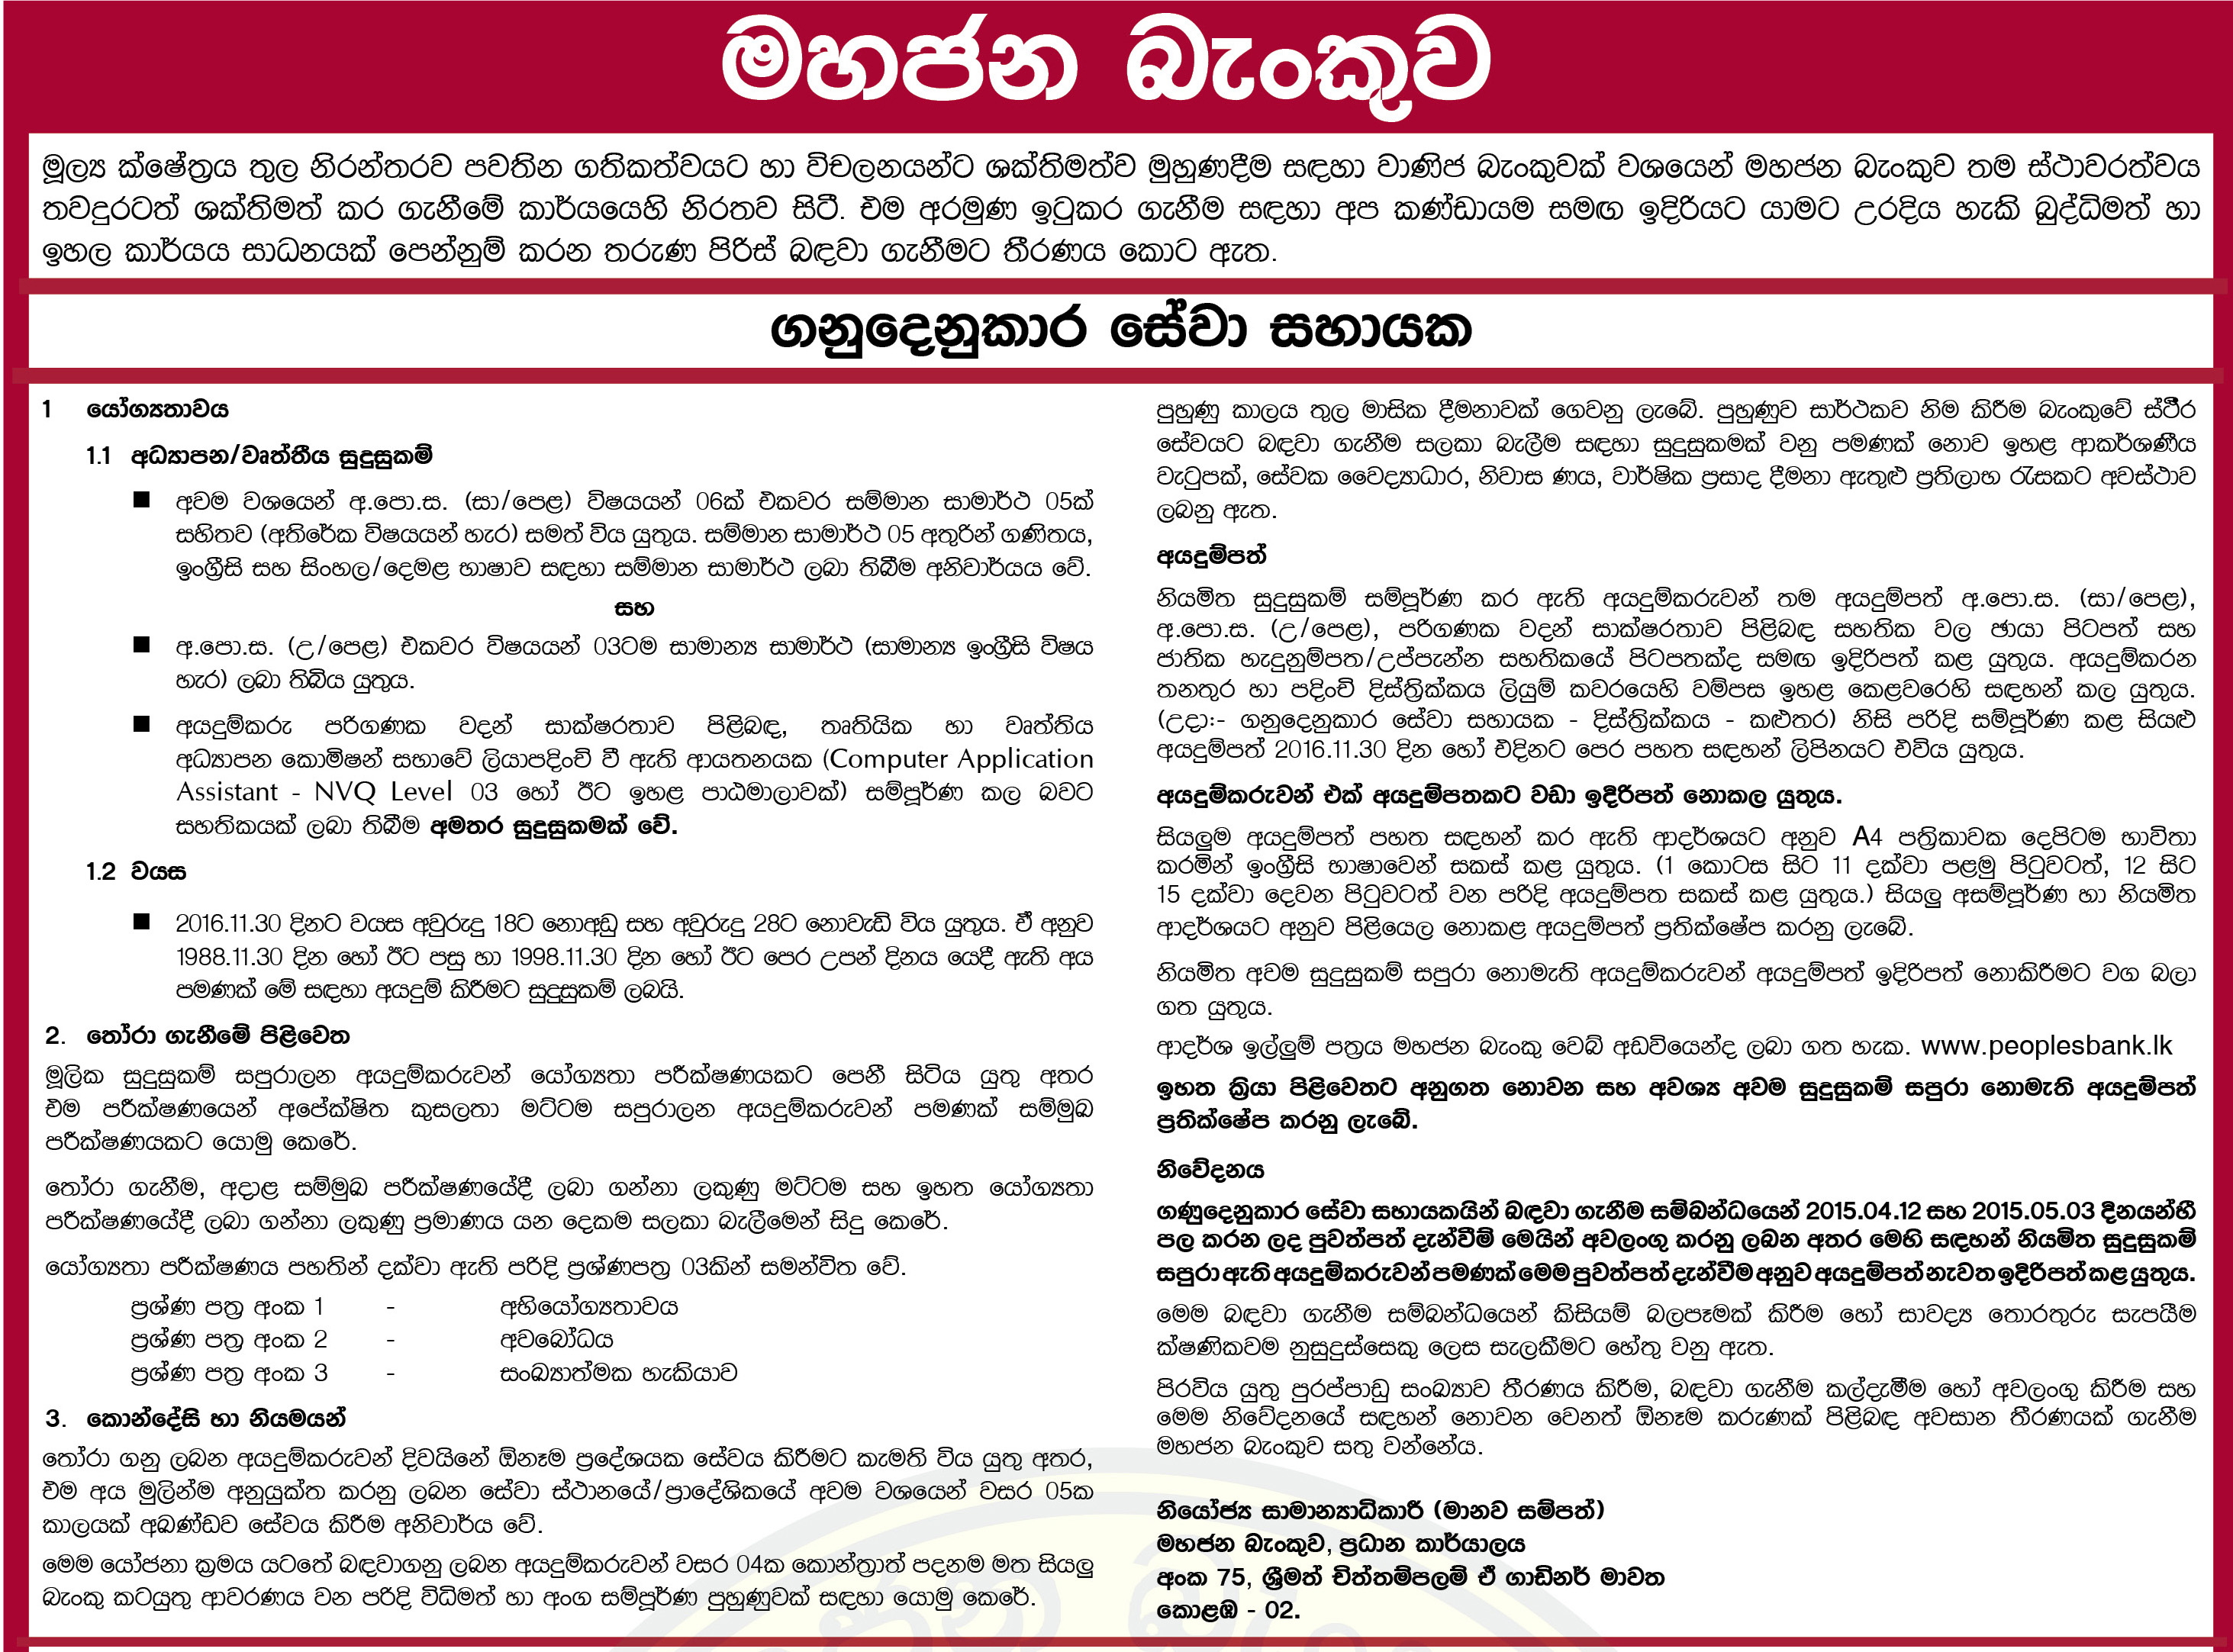 Customer Service Assistant Vacancy in Peoples Bank Sinhala Details